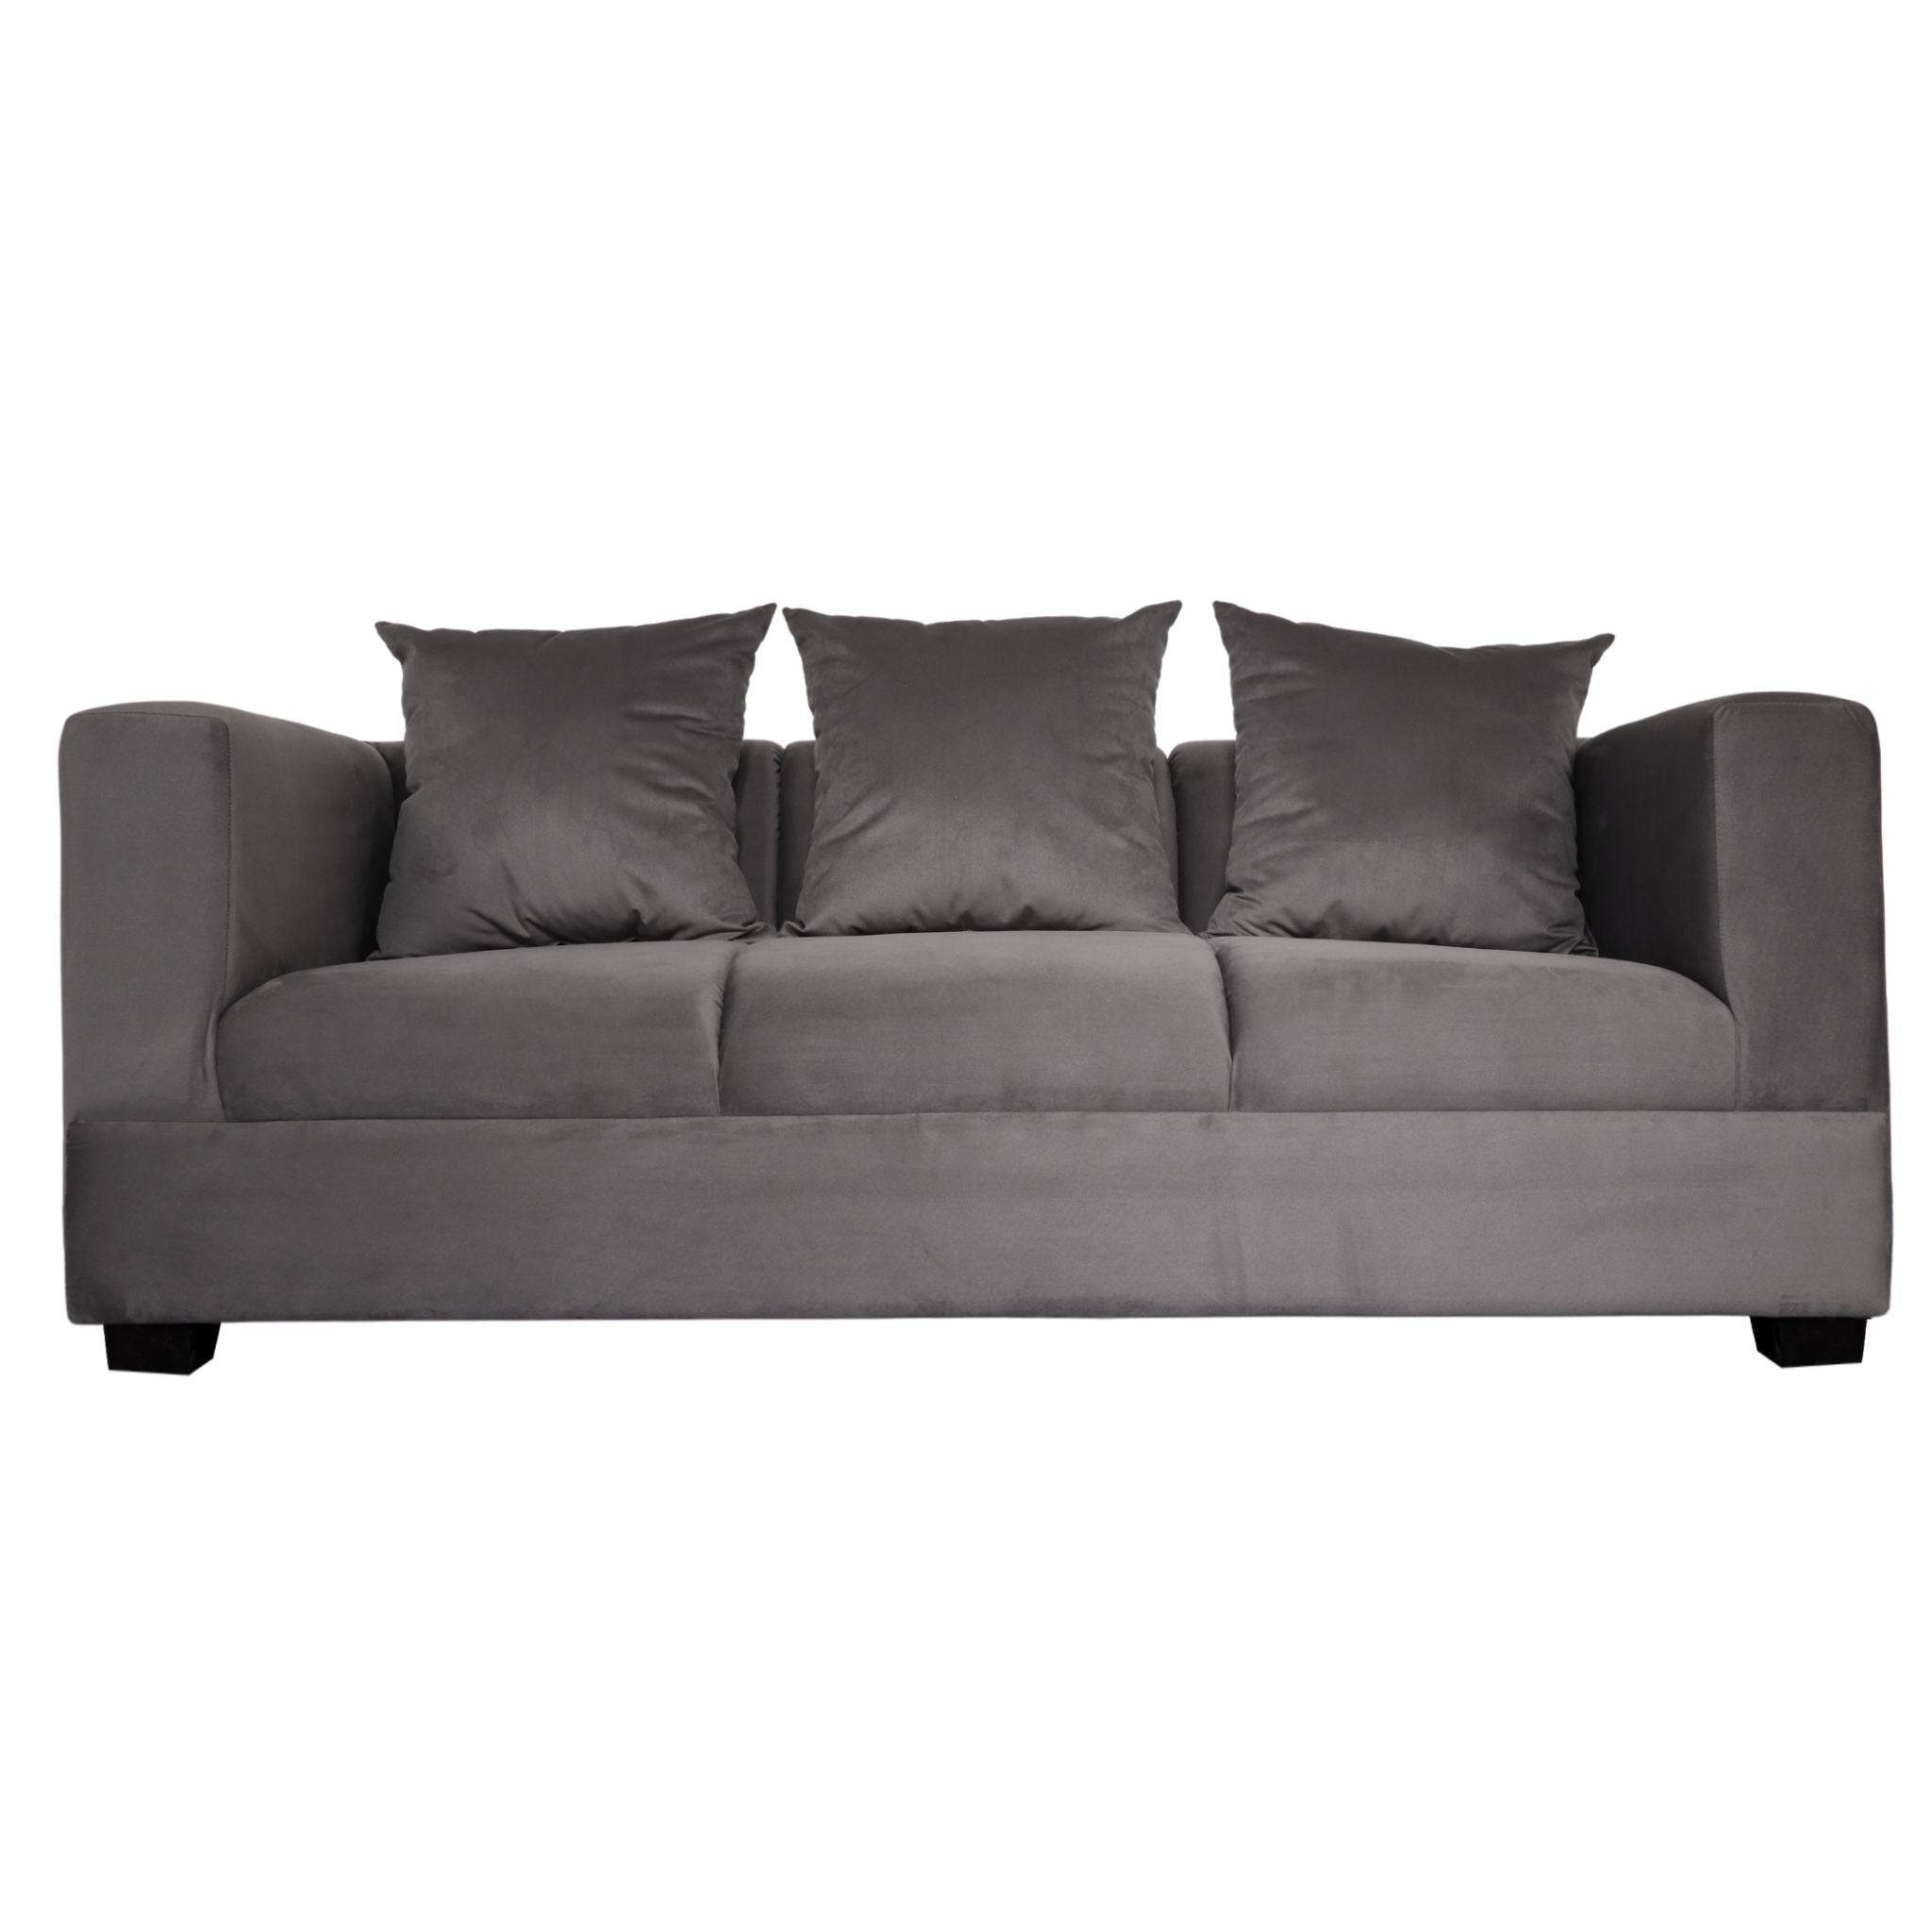 AIRIZ 3-Seater Fabric Sofa AF Home